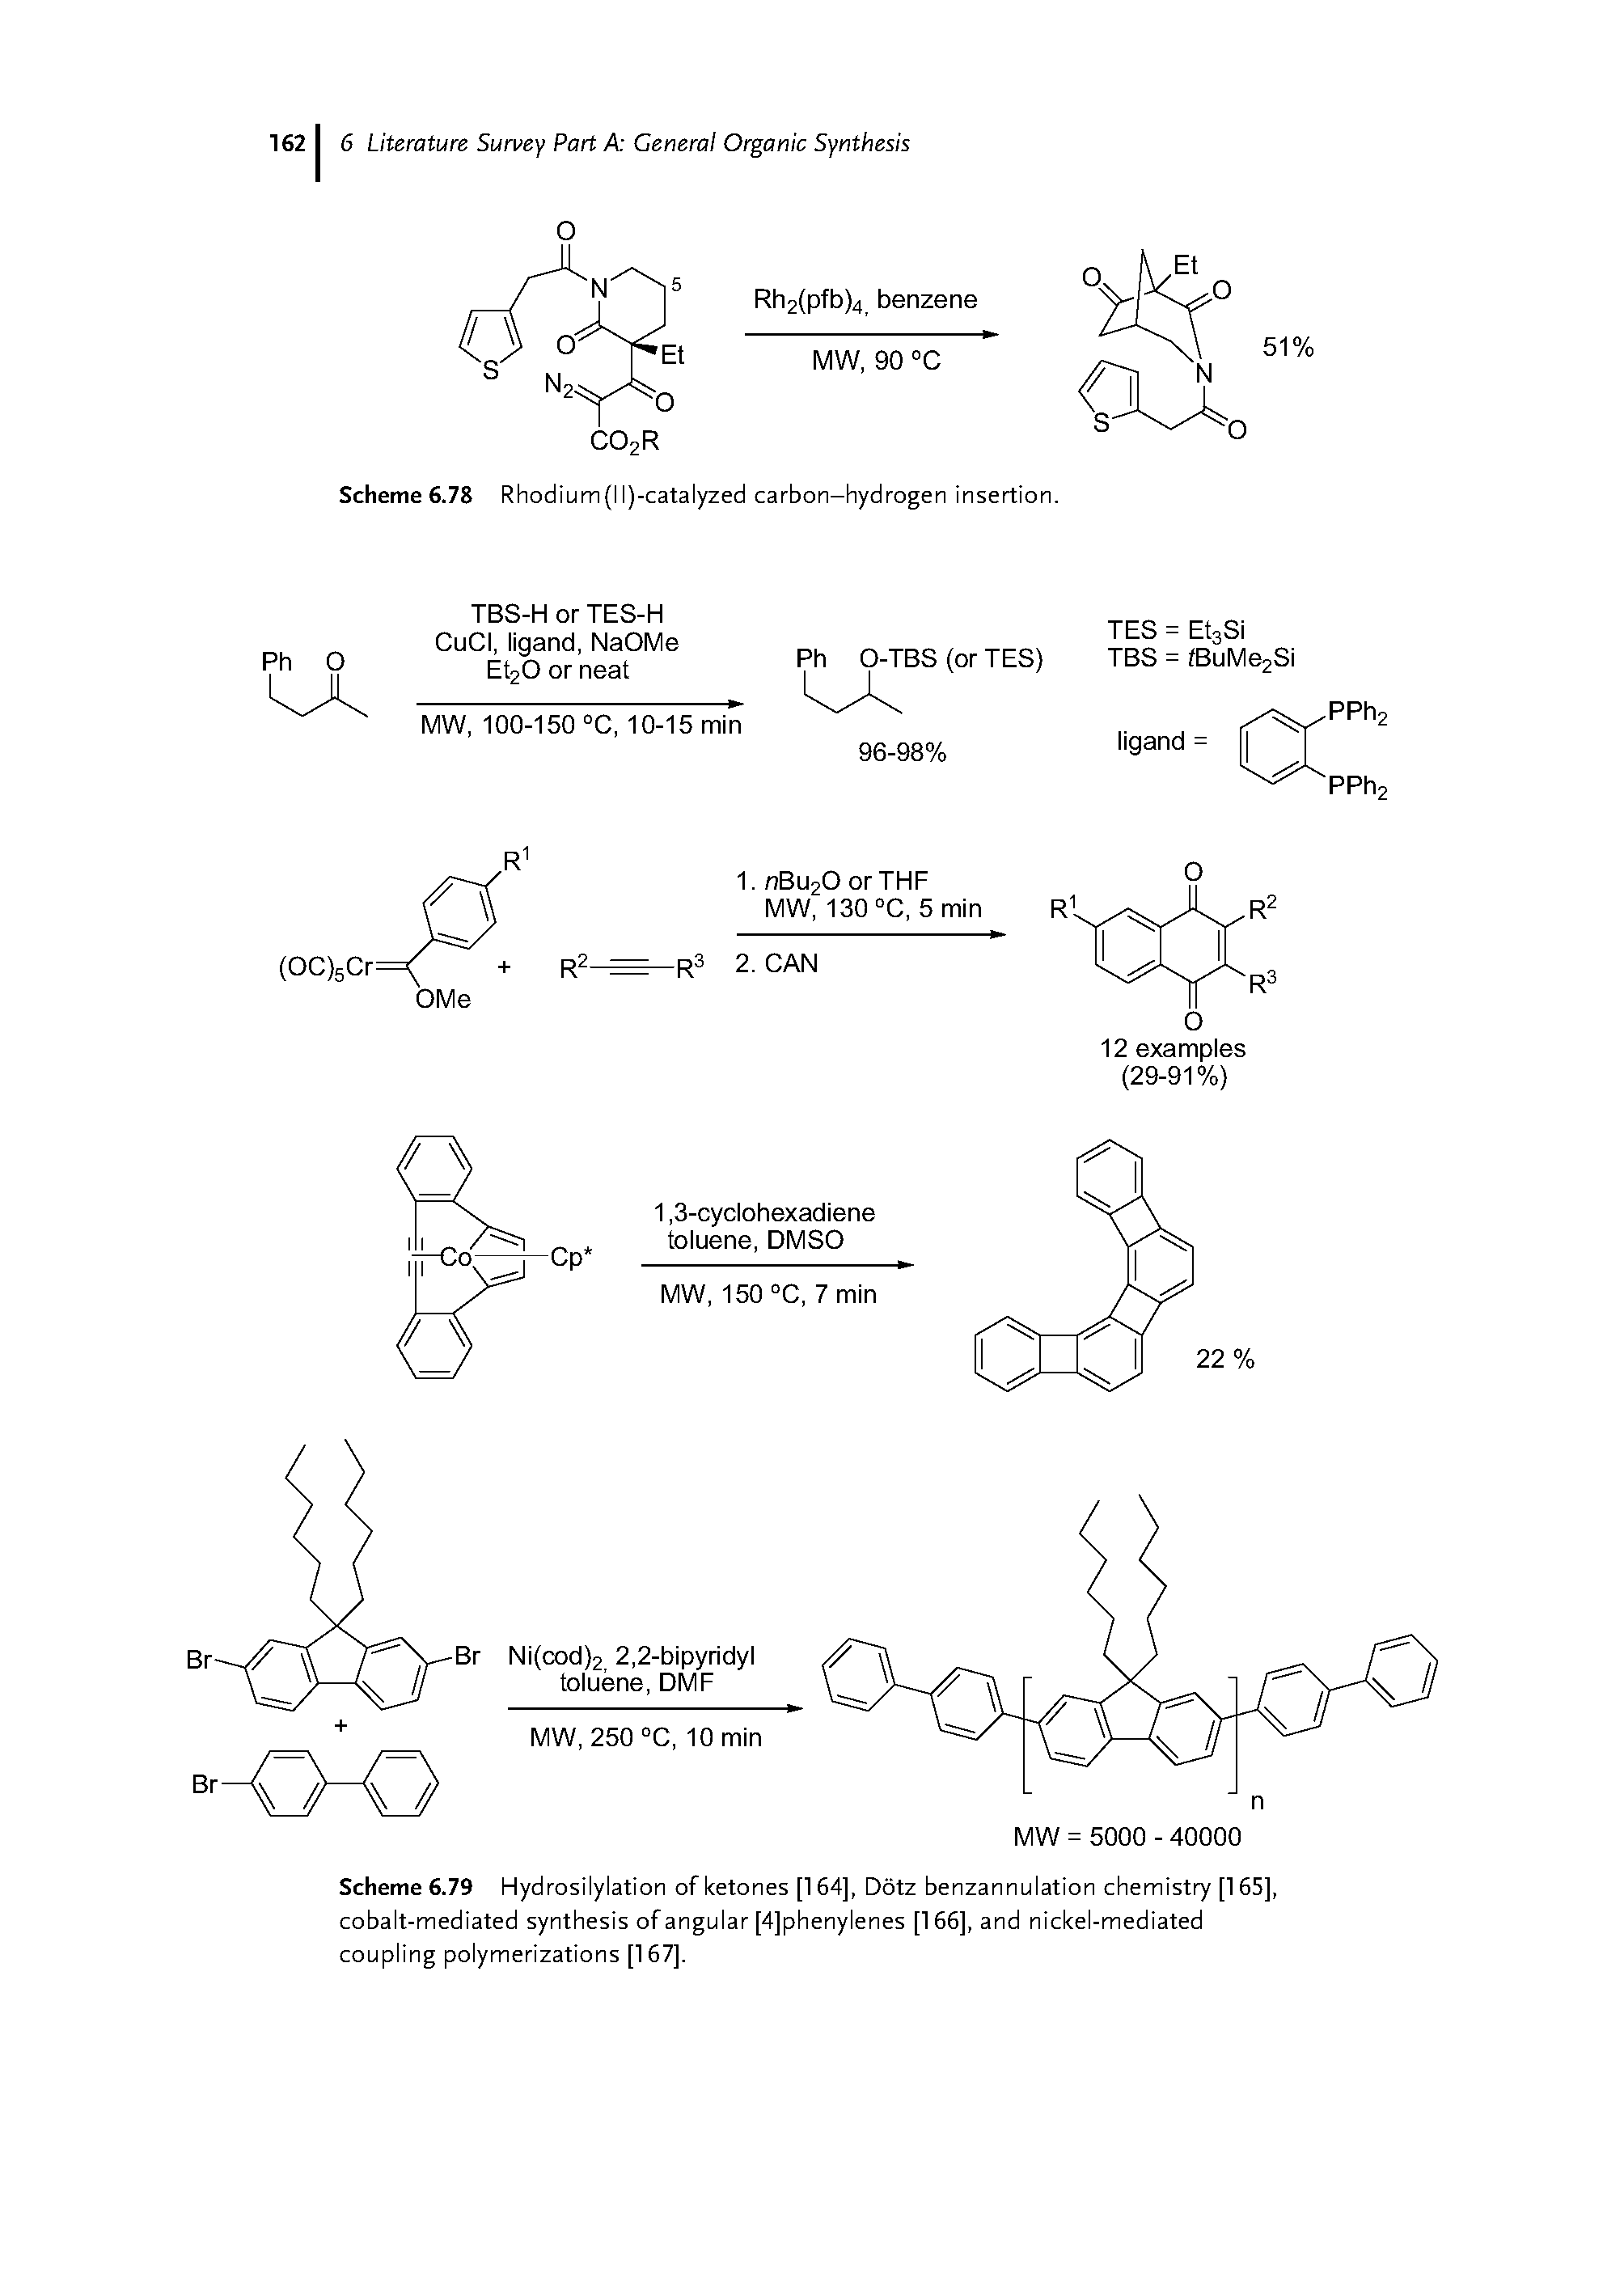 Scheme 6.79 Hydrosilylation of ketones [164], Dotz benzannulation chemistry [165], cobalt-mediated synthesis of angular [4]phenylenes [166], and nickel-mediated coupling polymerizations [167],...